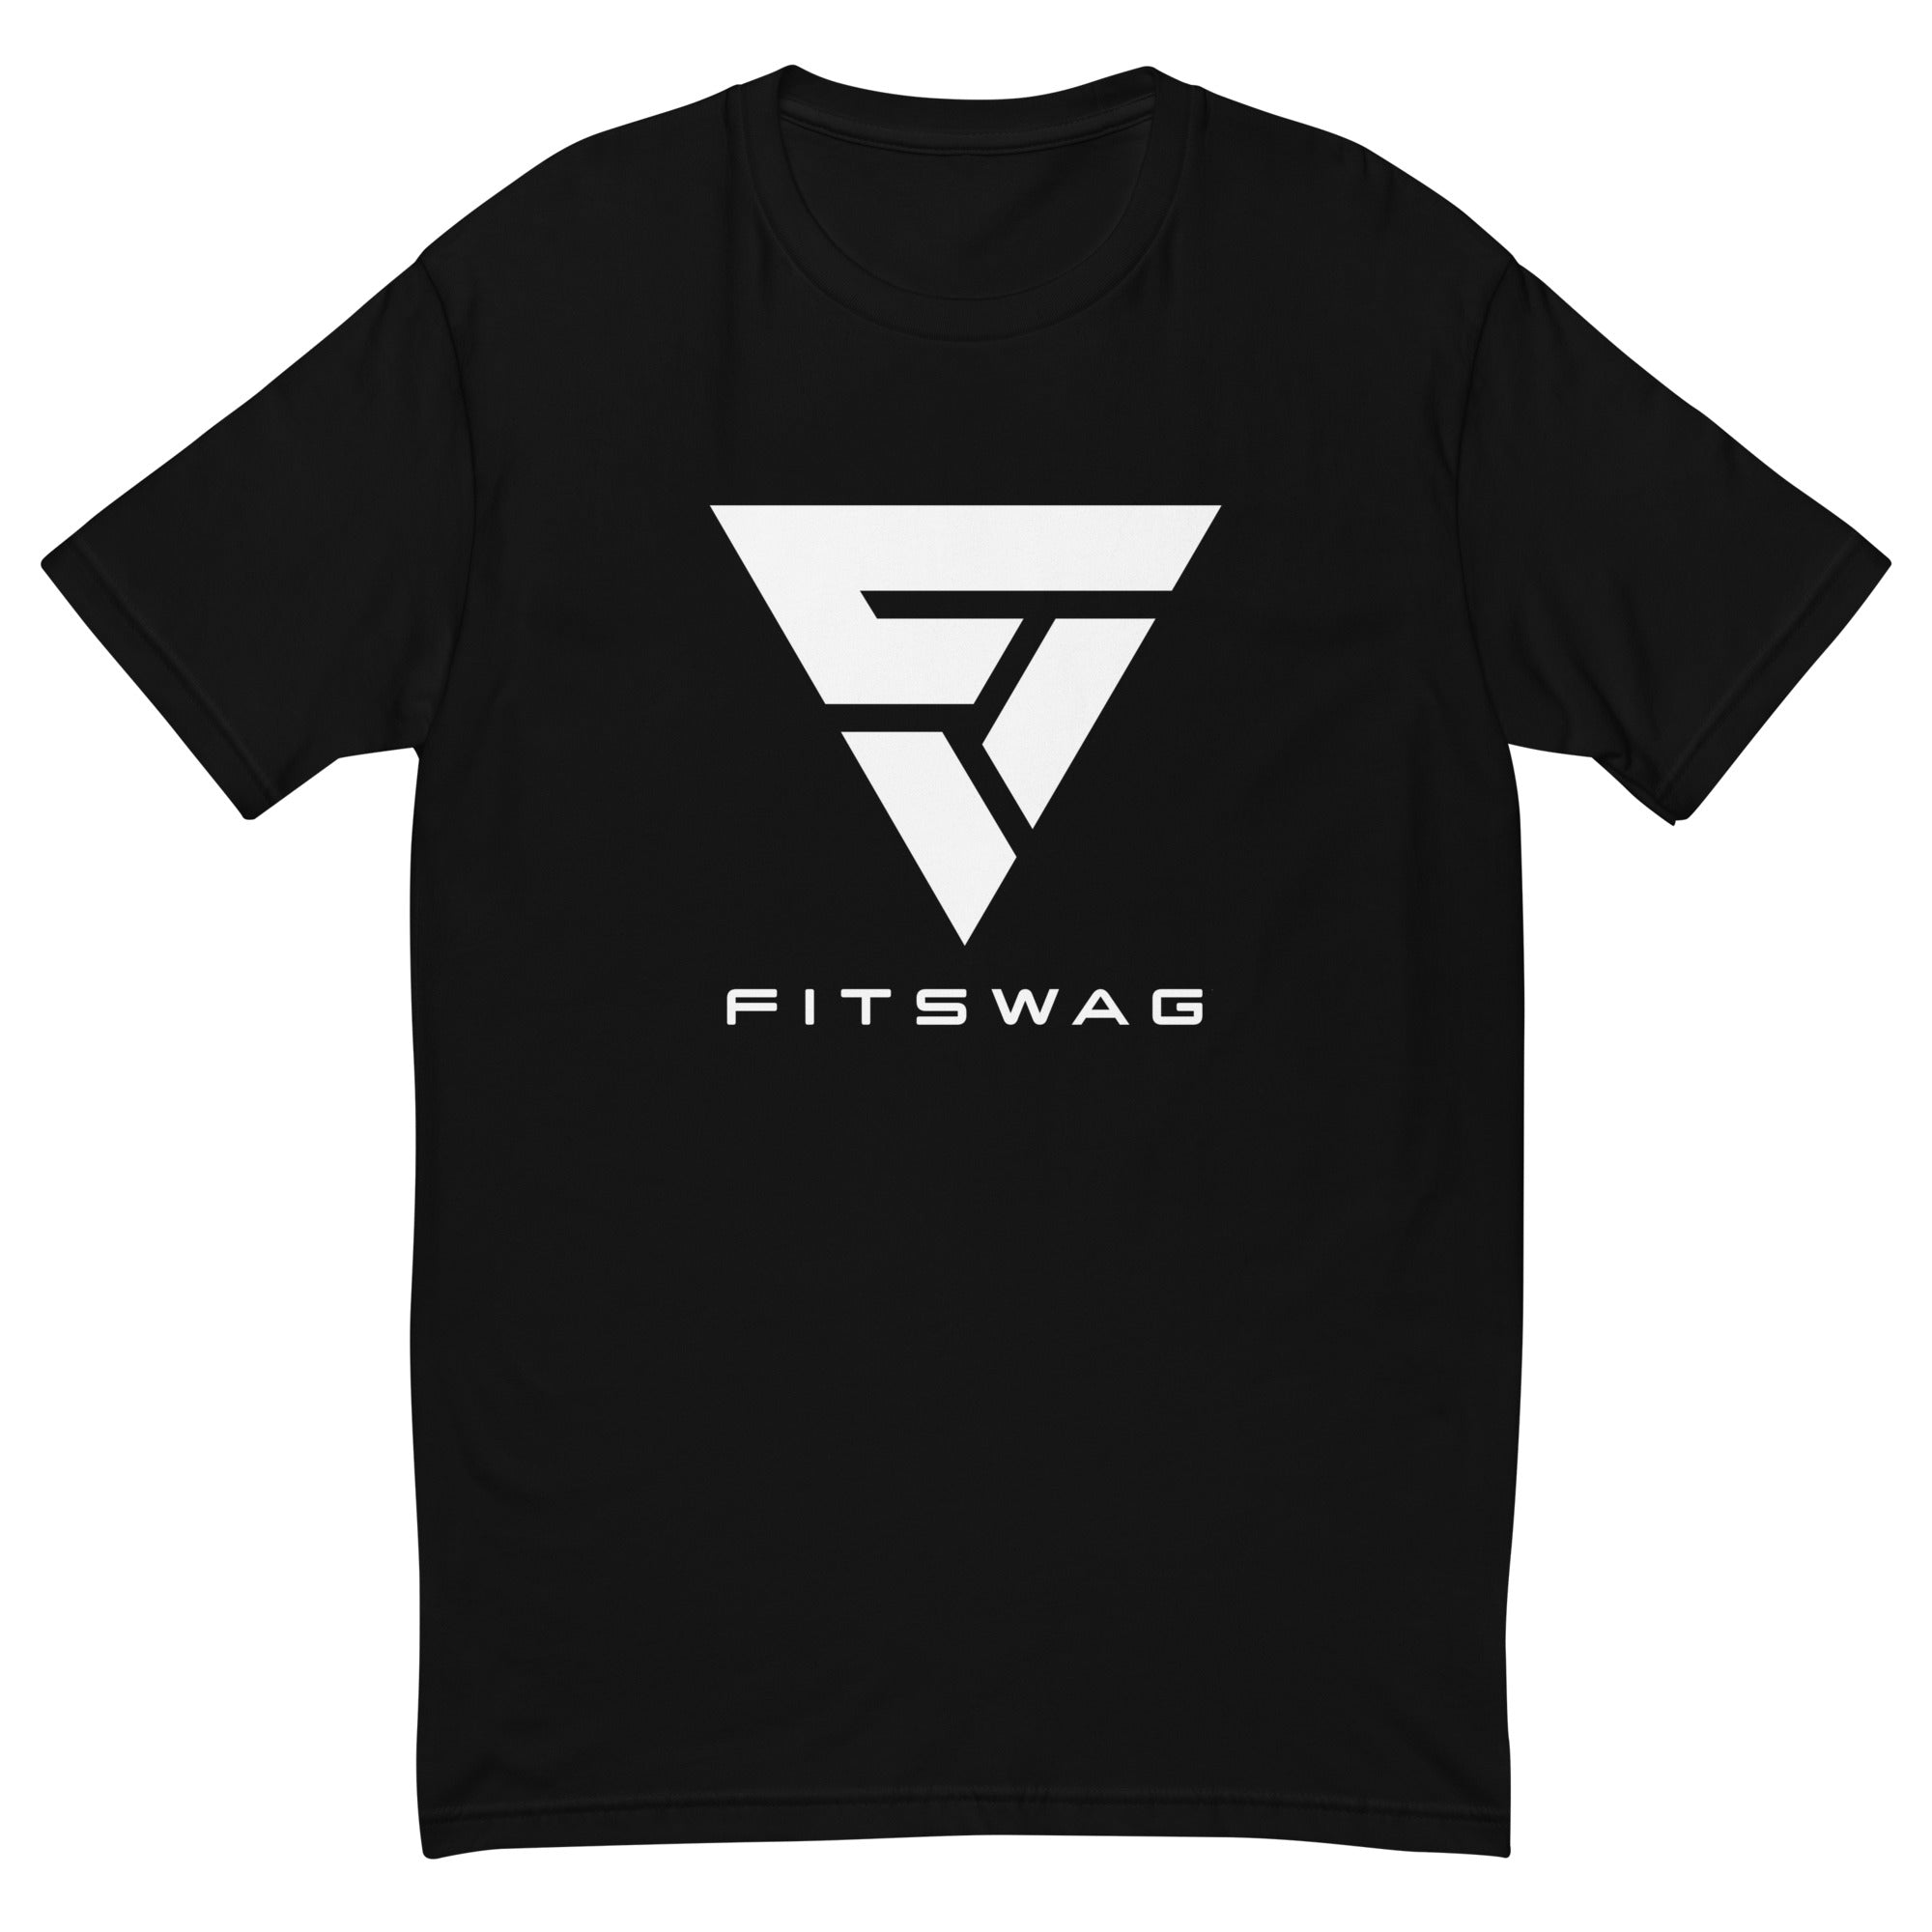 Flex Your Swag T-shirt